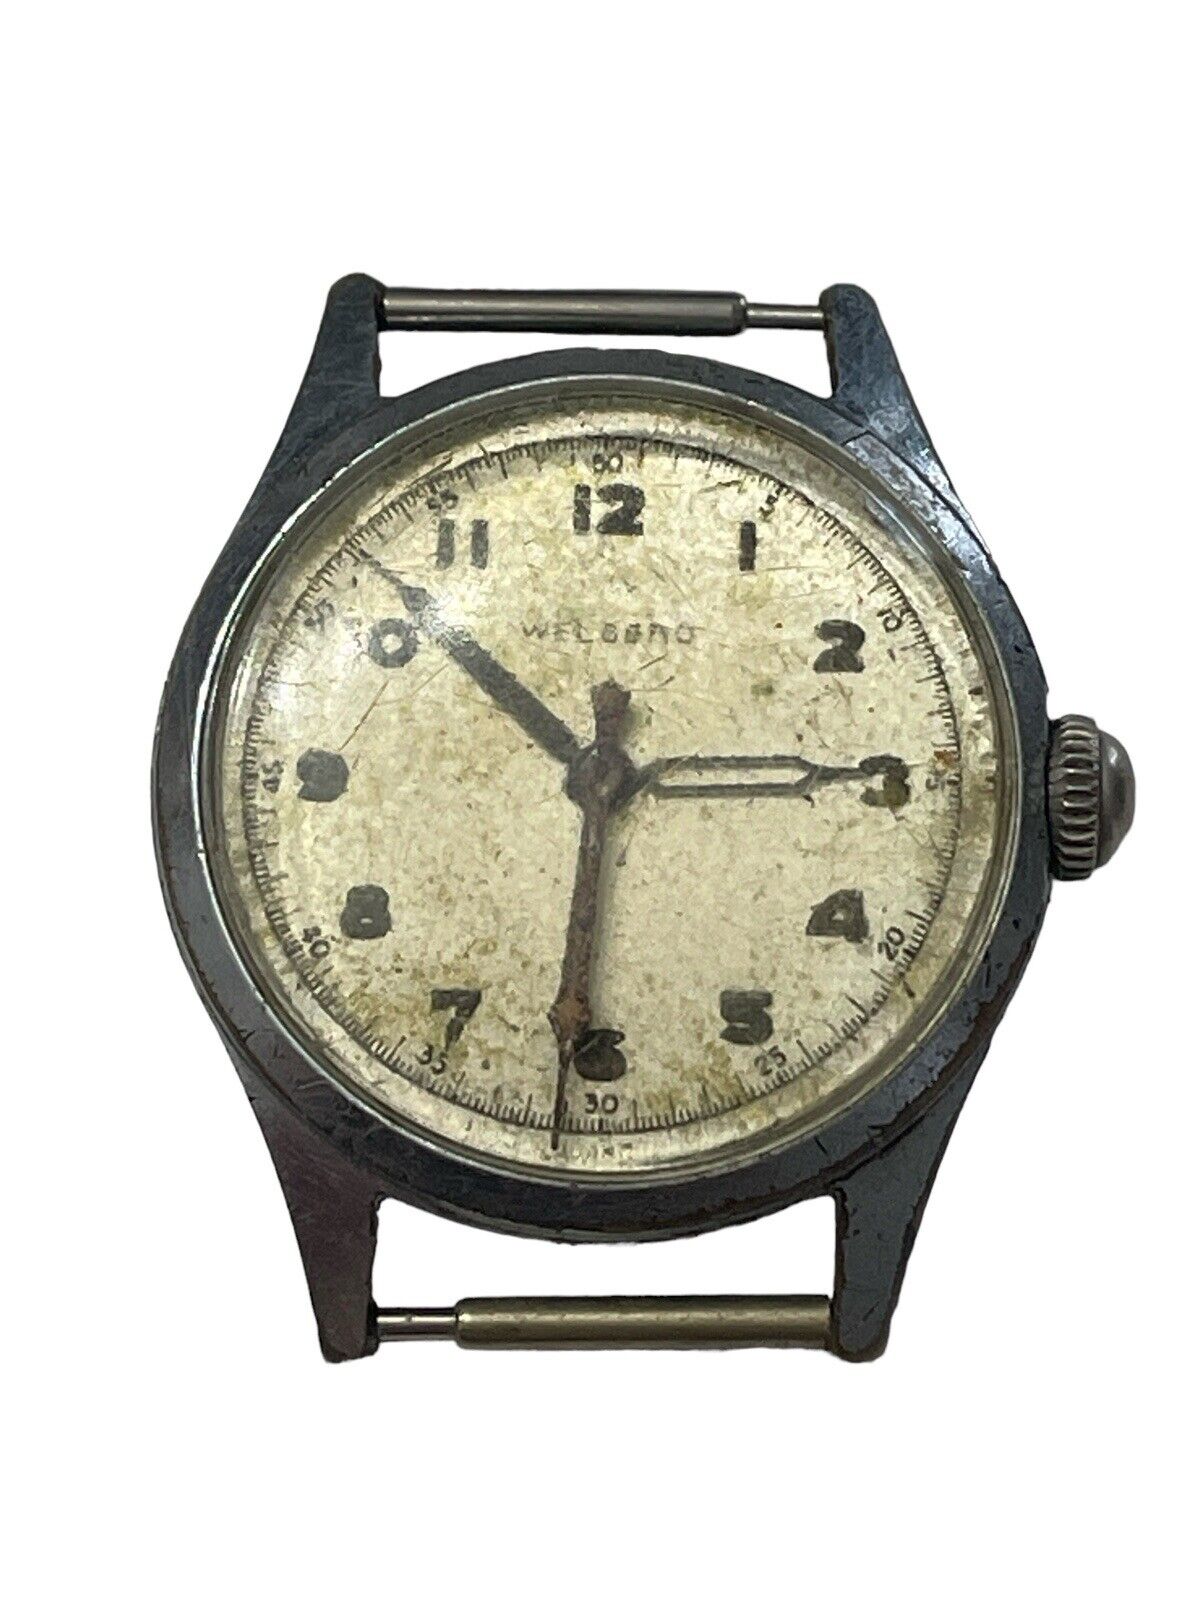 Vintage WW 2 Welsbro 17 Jewels Military Style Manual Wind Watch Bezel Only